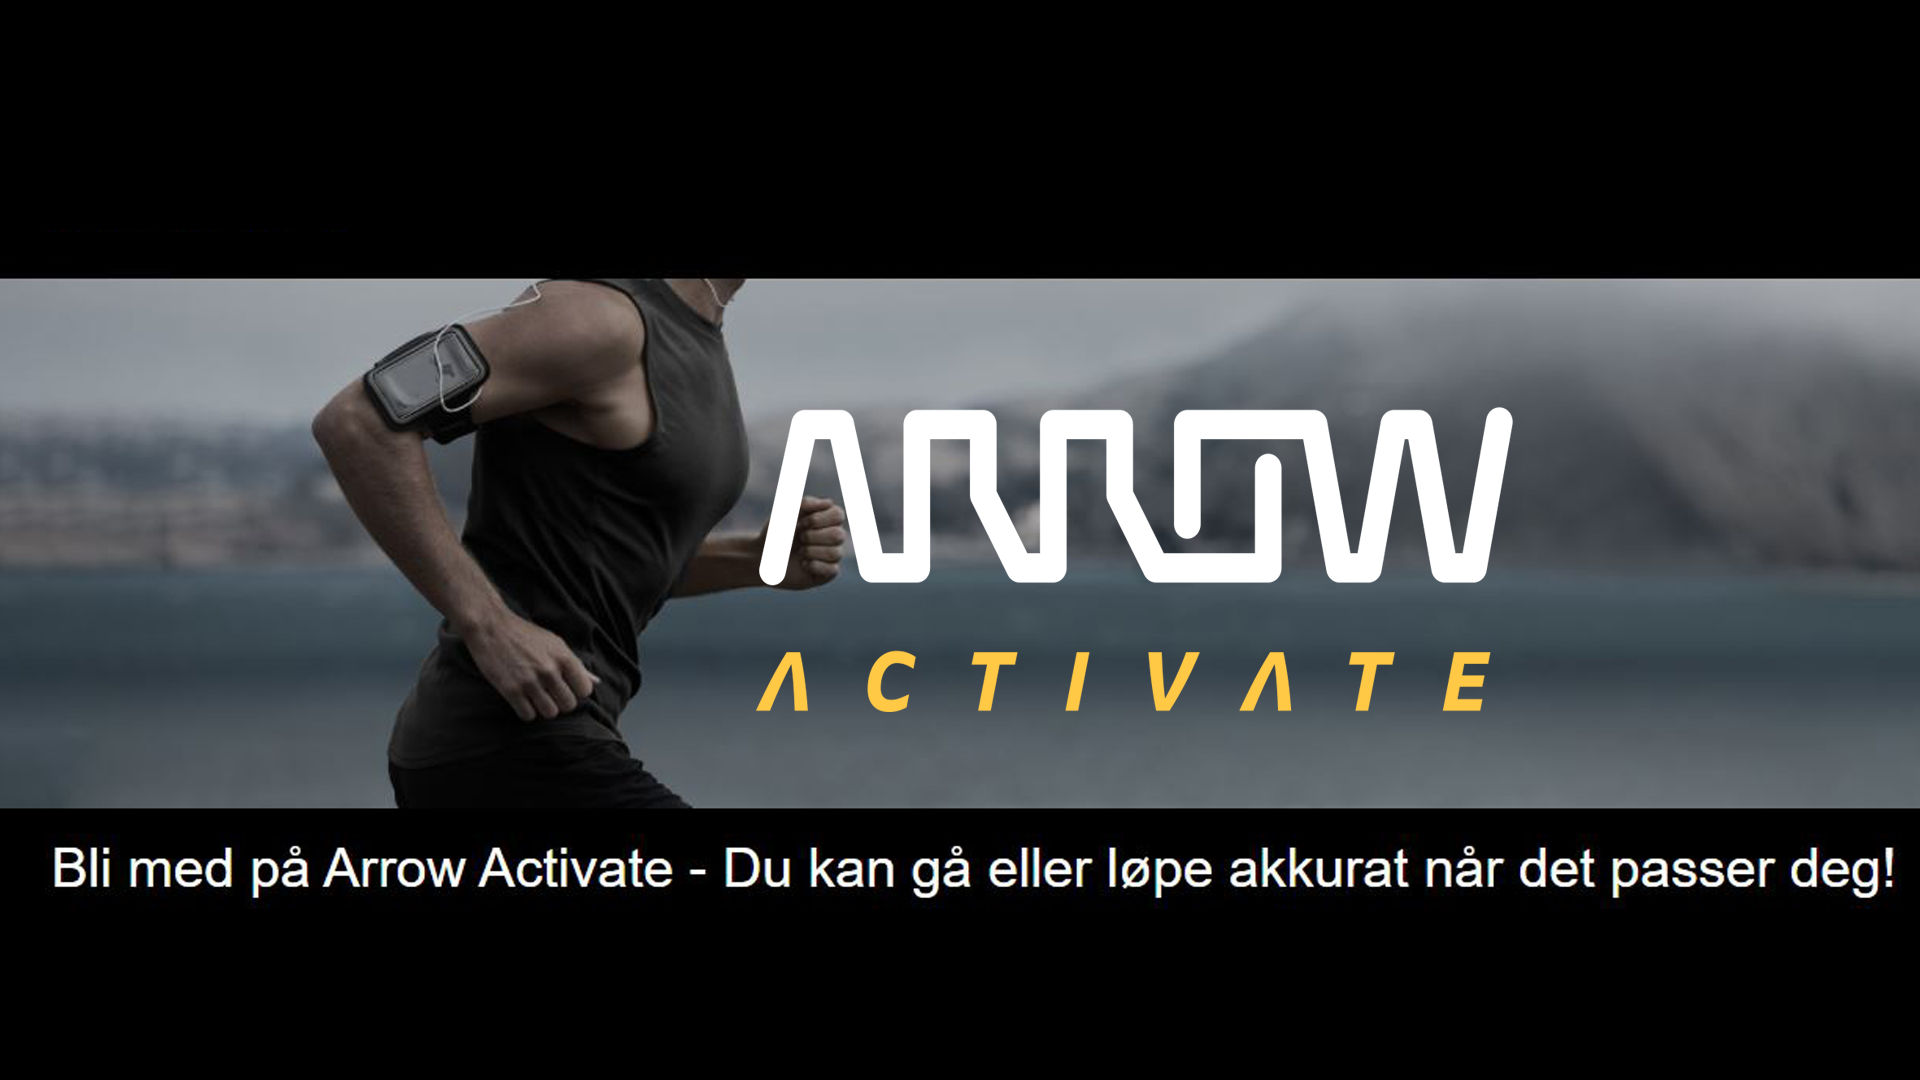 Arrow Activate Norway - Konkurranse #3